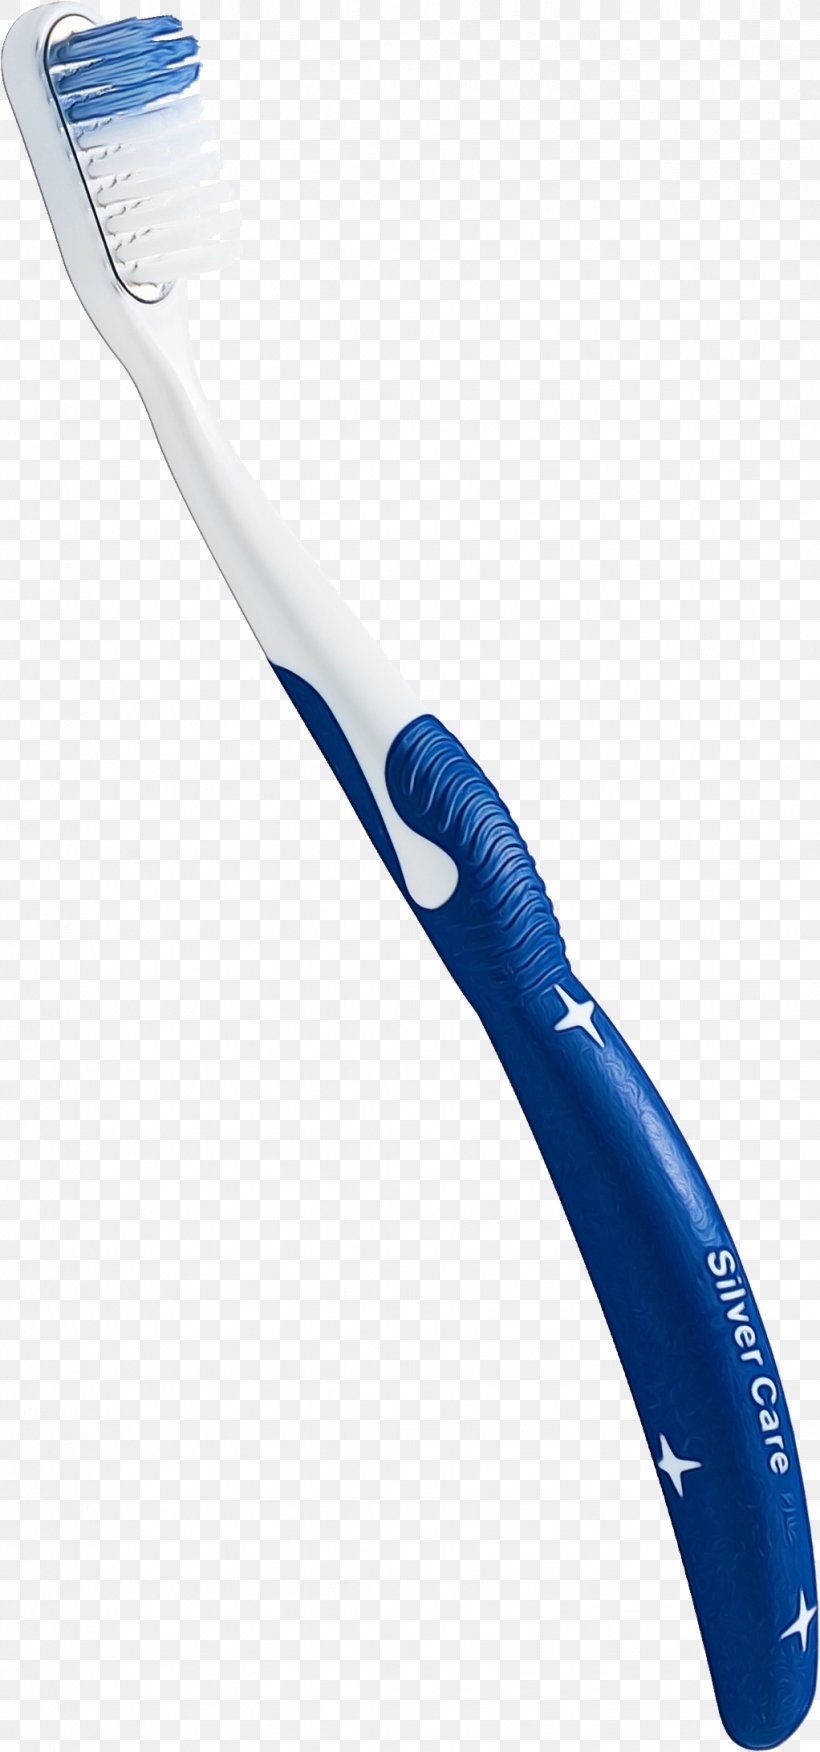 Tool Slip Joint Pliers Softball Bat Hand Tool, PNG, 1022x2184px, Watercolor, Hand Tool, Paint, Slip Joint Pliers, Softball Bat Download Free